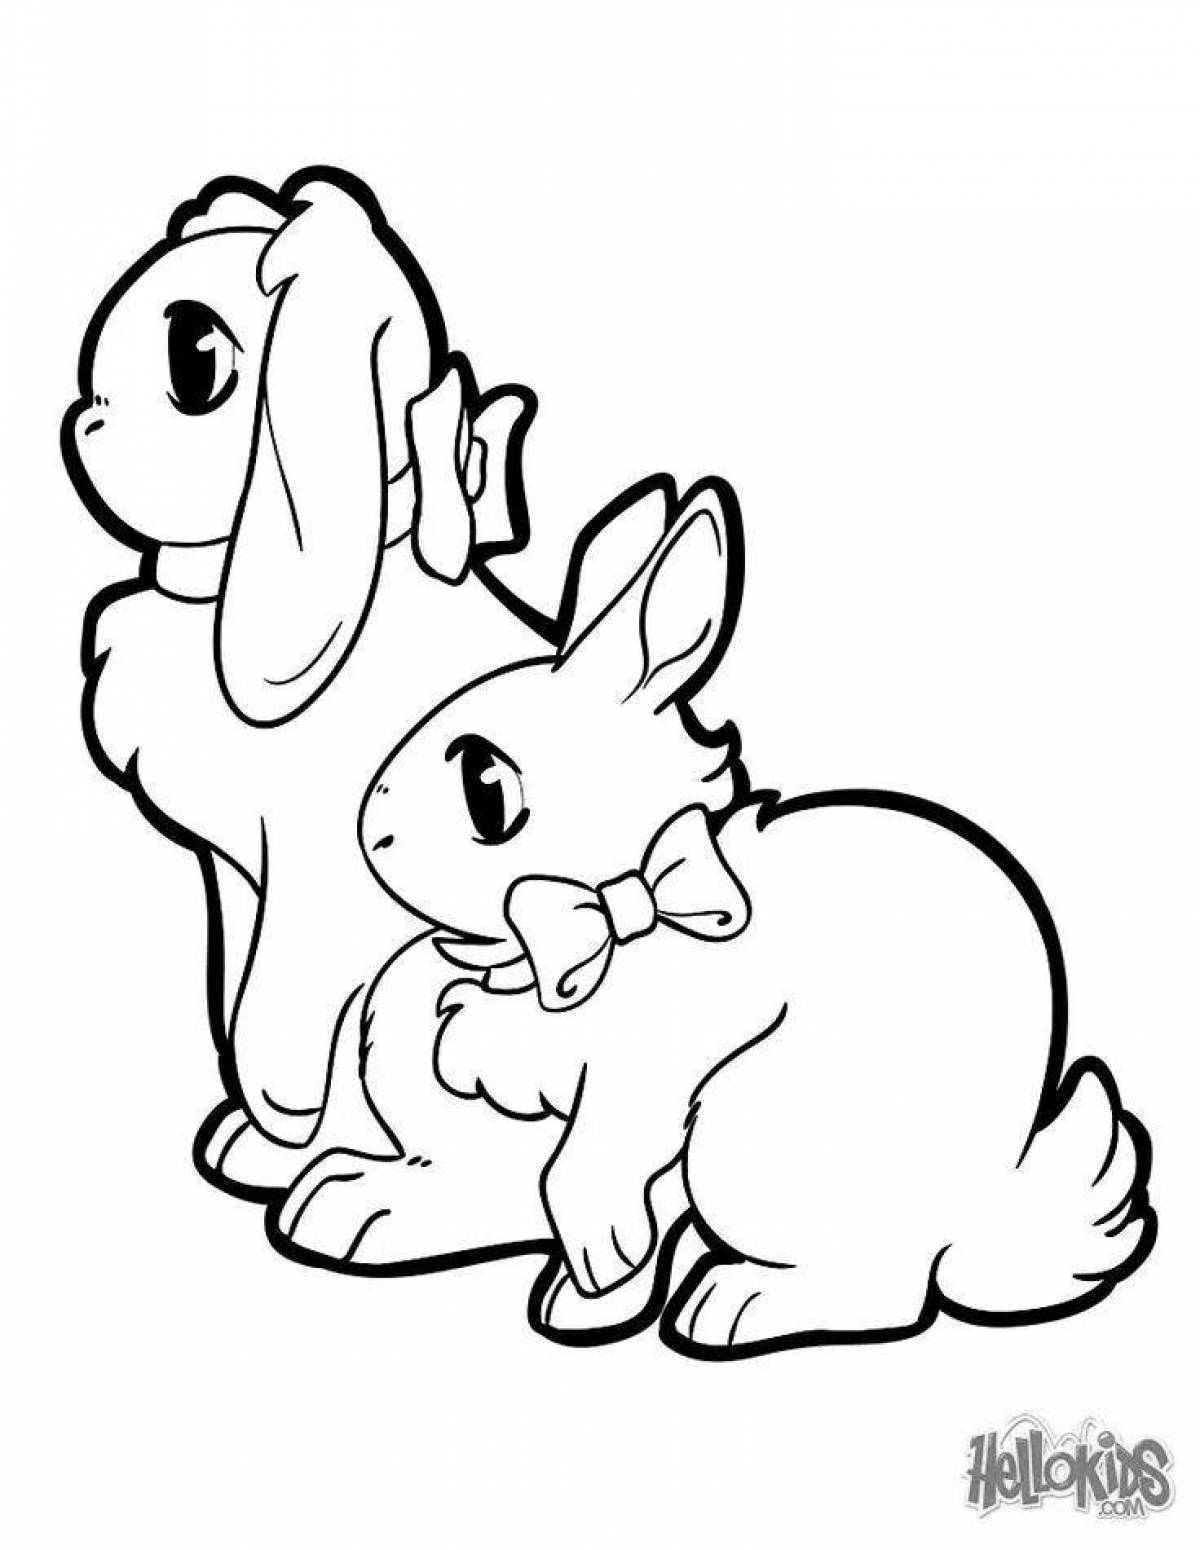 Adorable rabbit coloring book